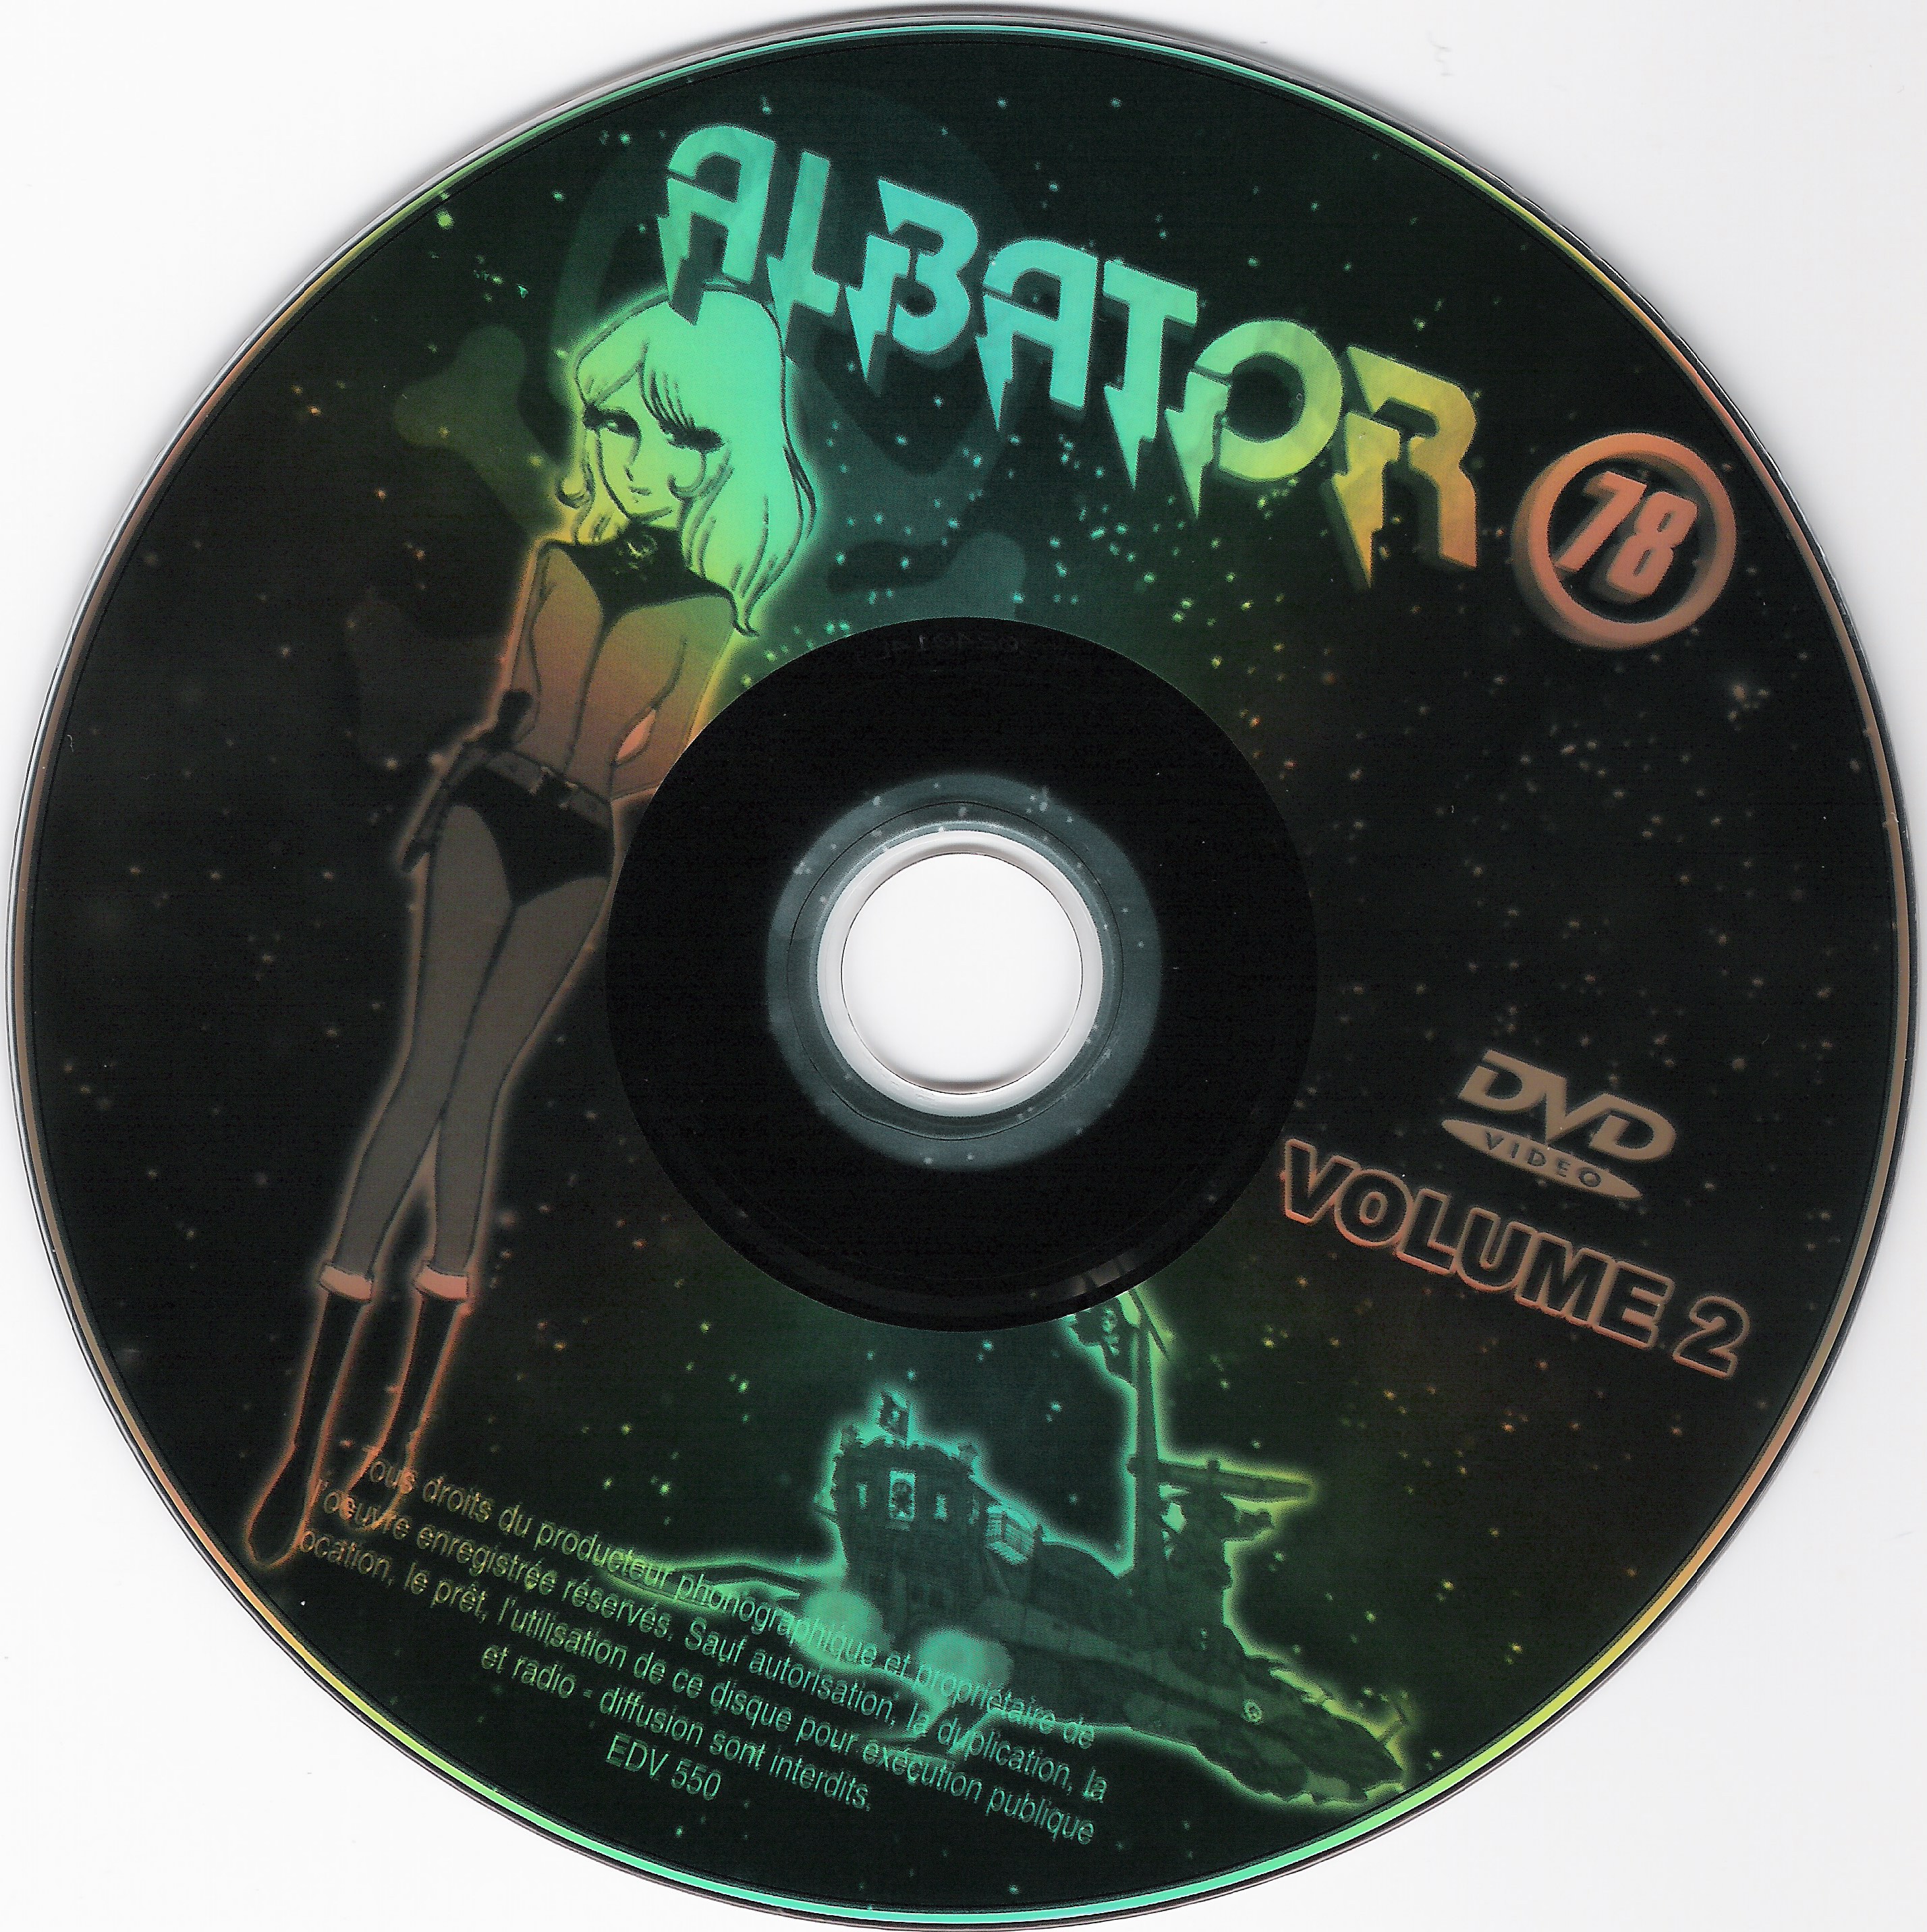 Albator 78 vol 2 (GENERATION DVD)